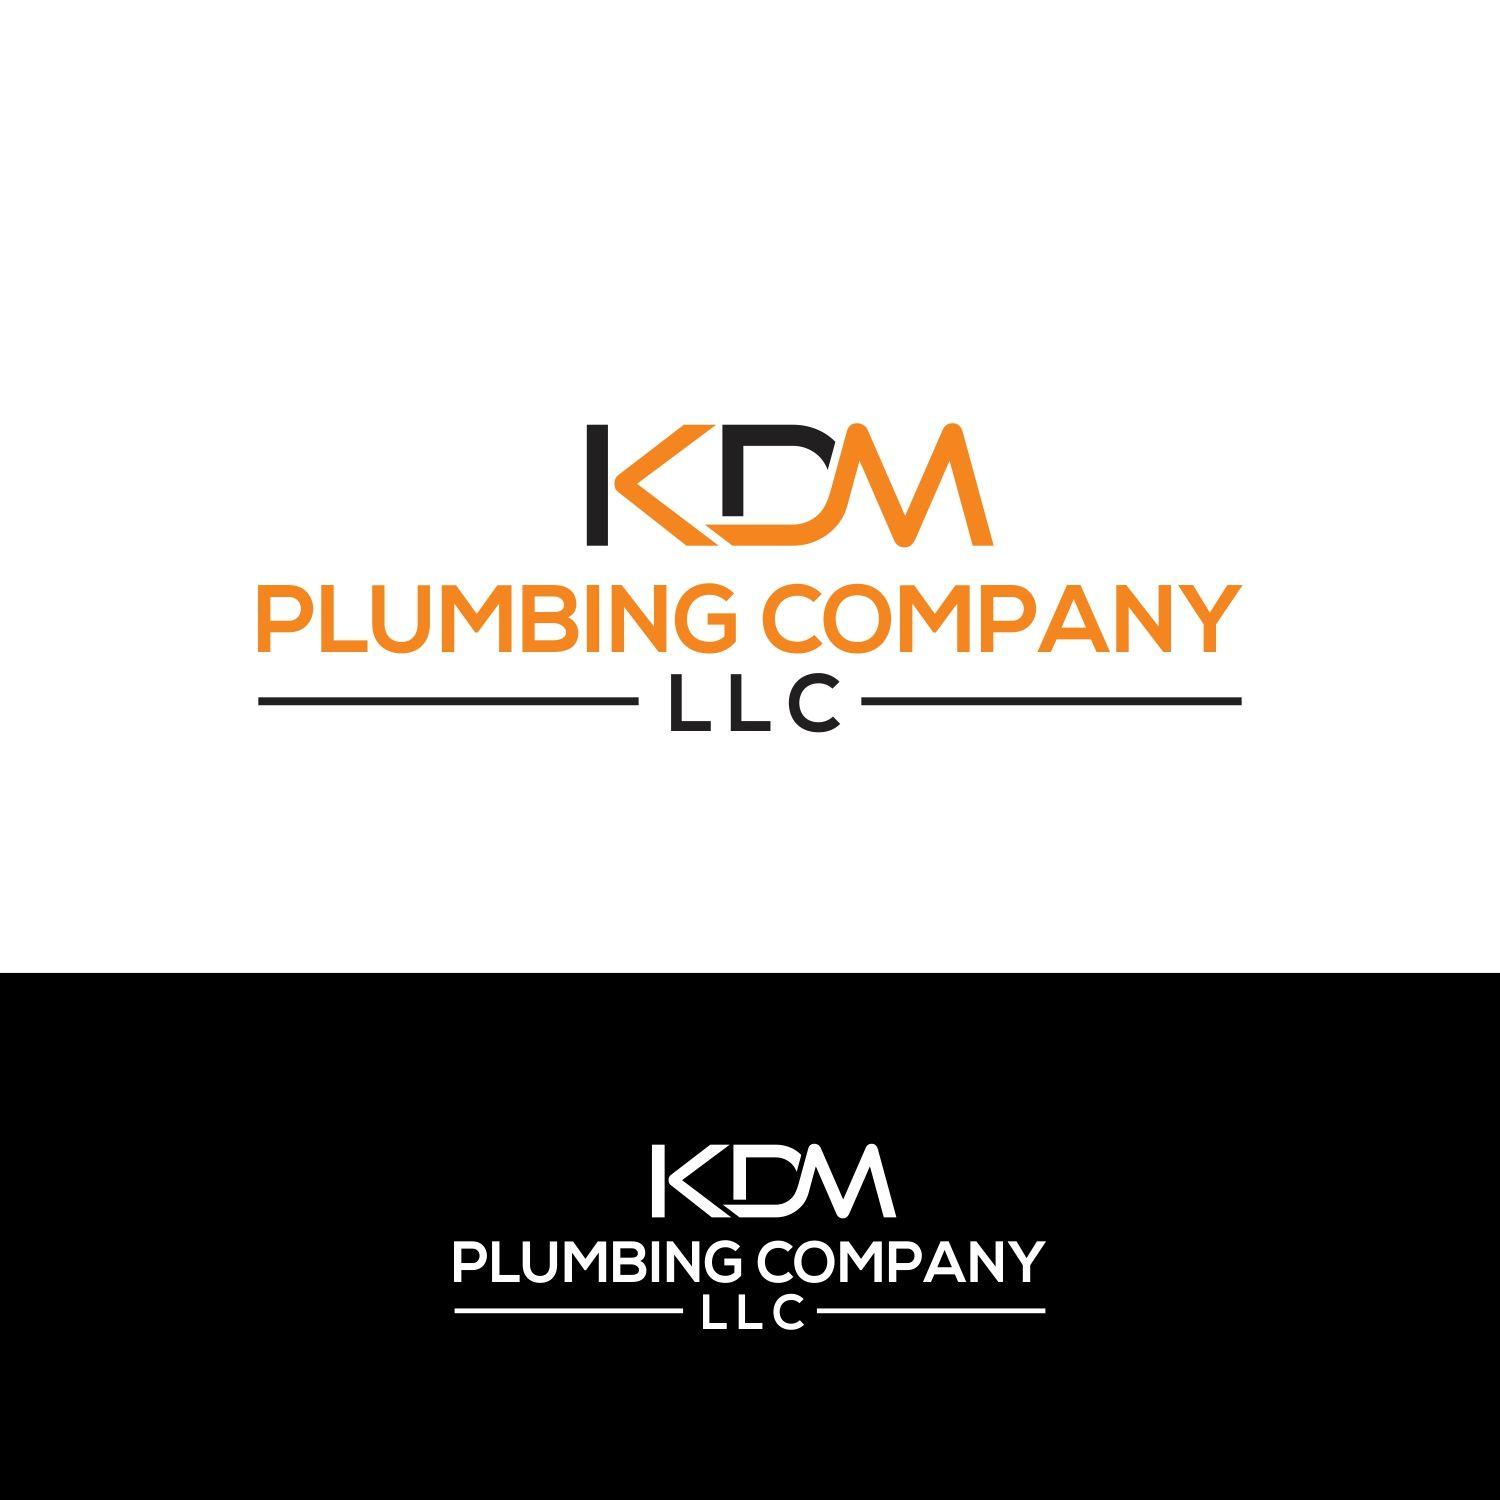 KDM Logo - Masculine, Bold, Home Improvement Logo Design for KDM for all your ...